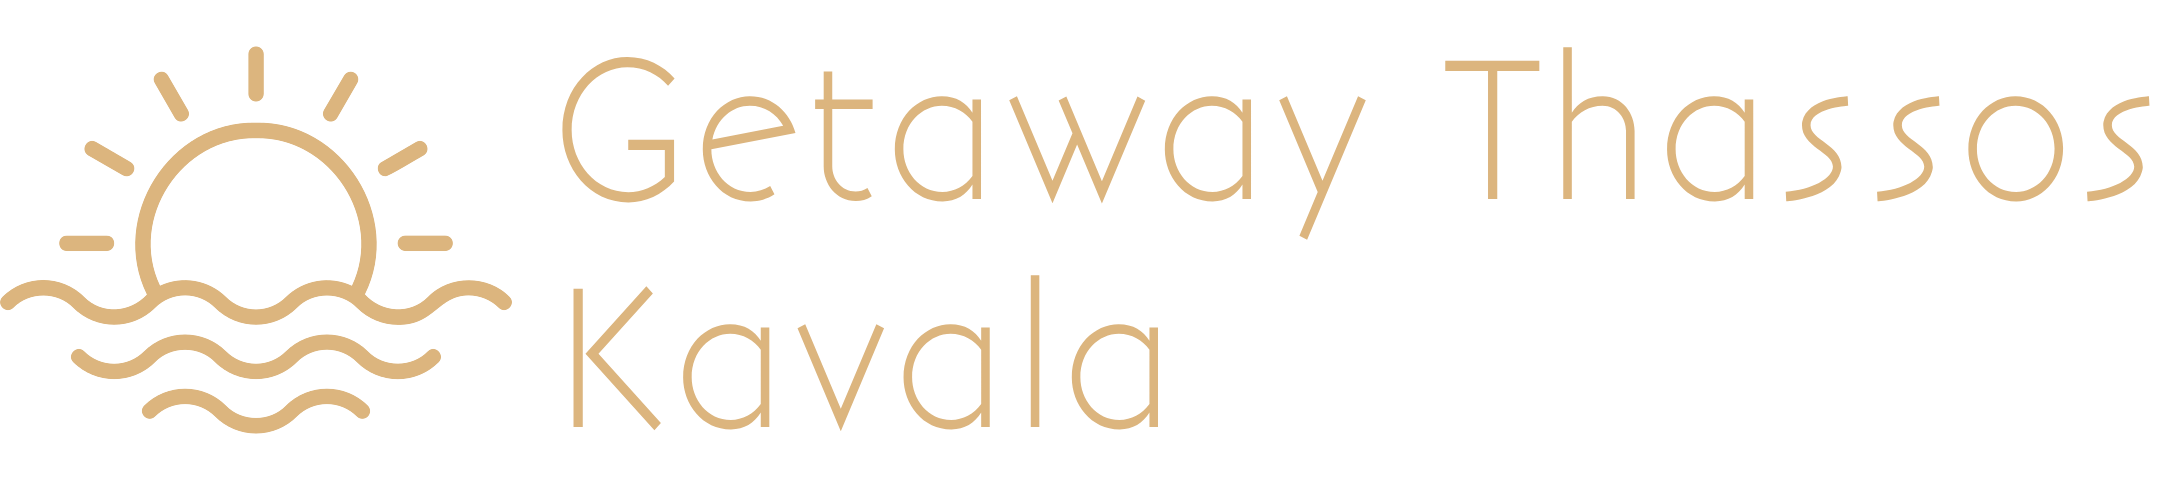 Getaway Thassos Kavala | Our resorts - Getaway Thassos Kavala